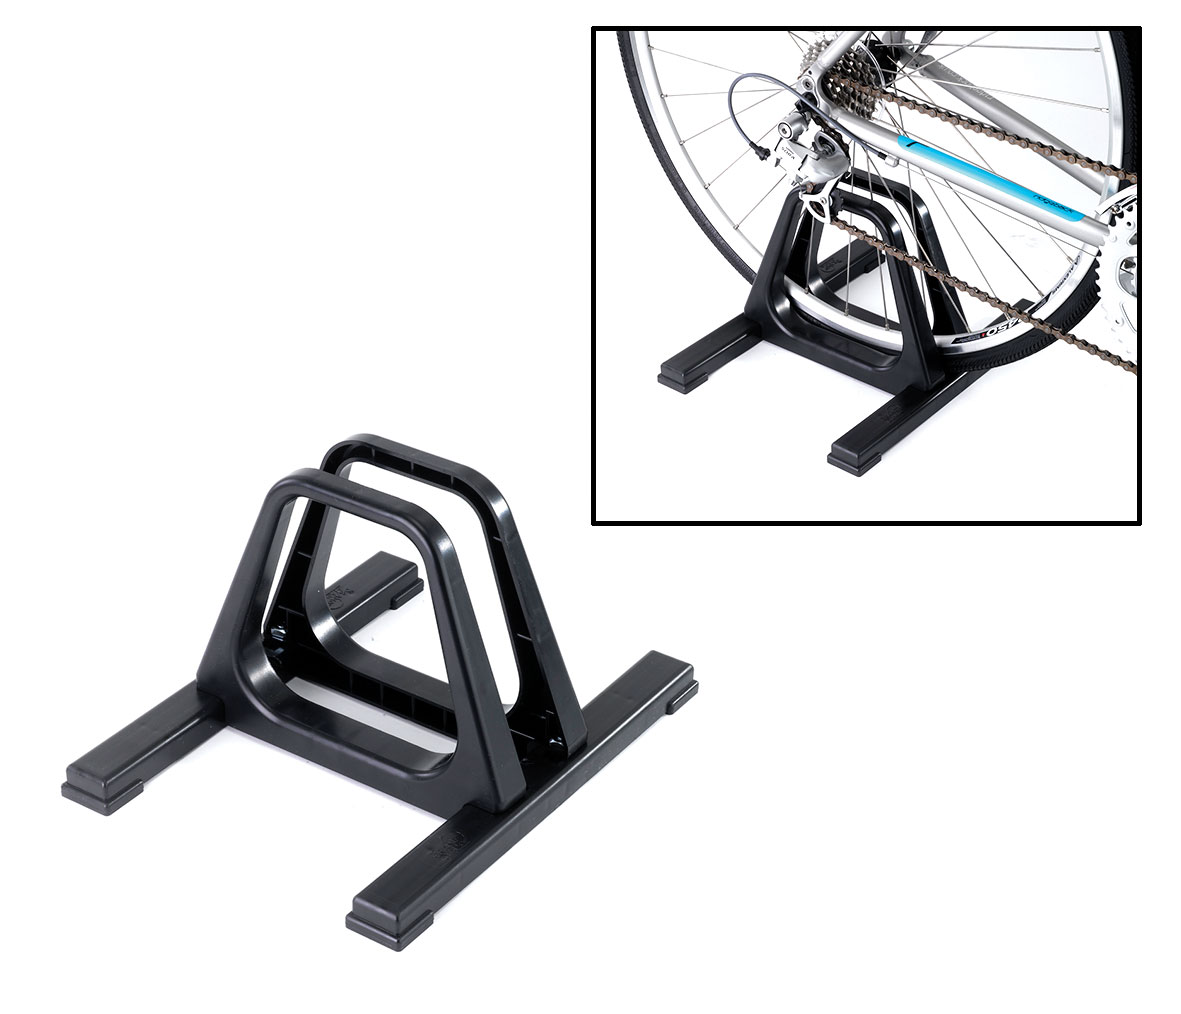 1-Bike Gear Up Grandstand Single Bike Display/ Storage Rack Black 